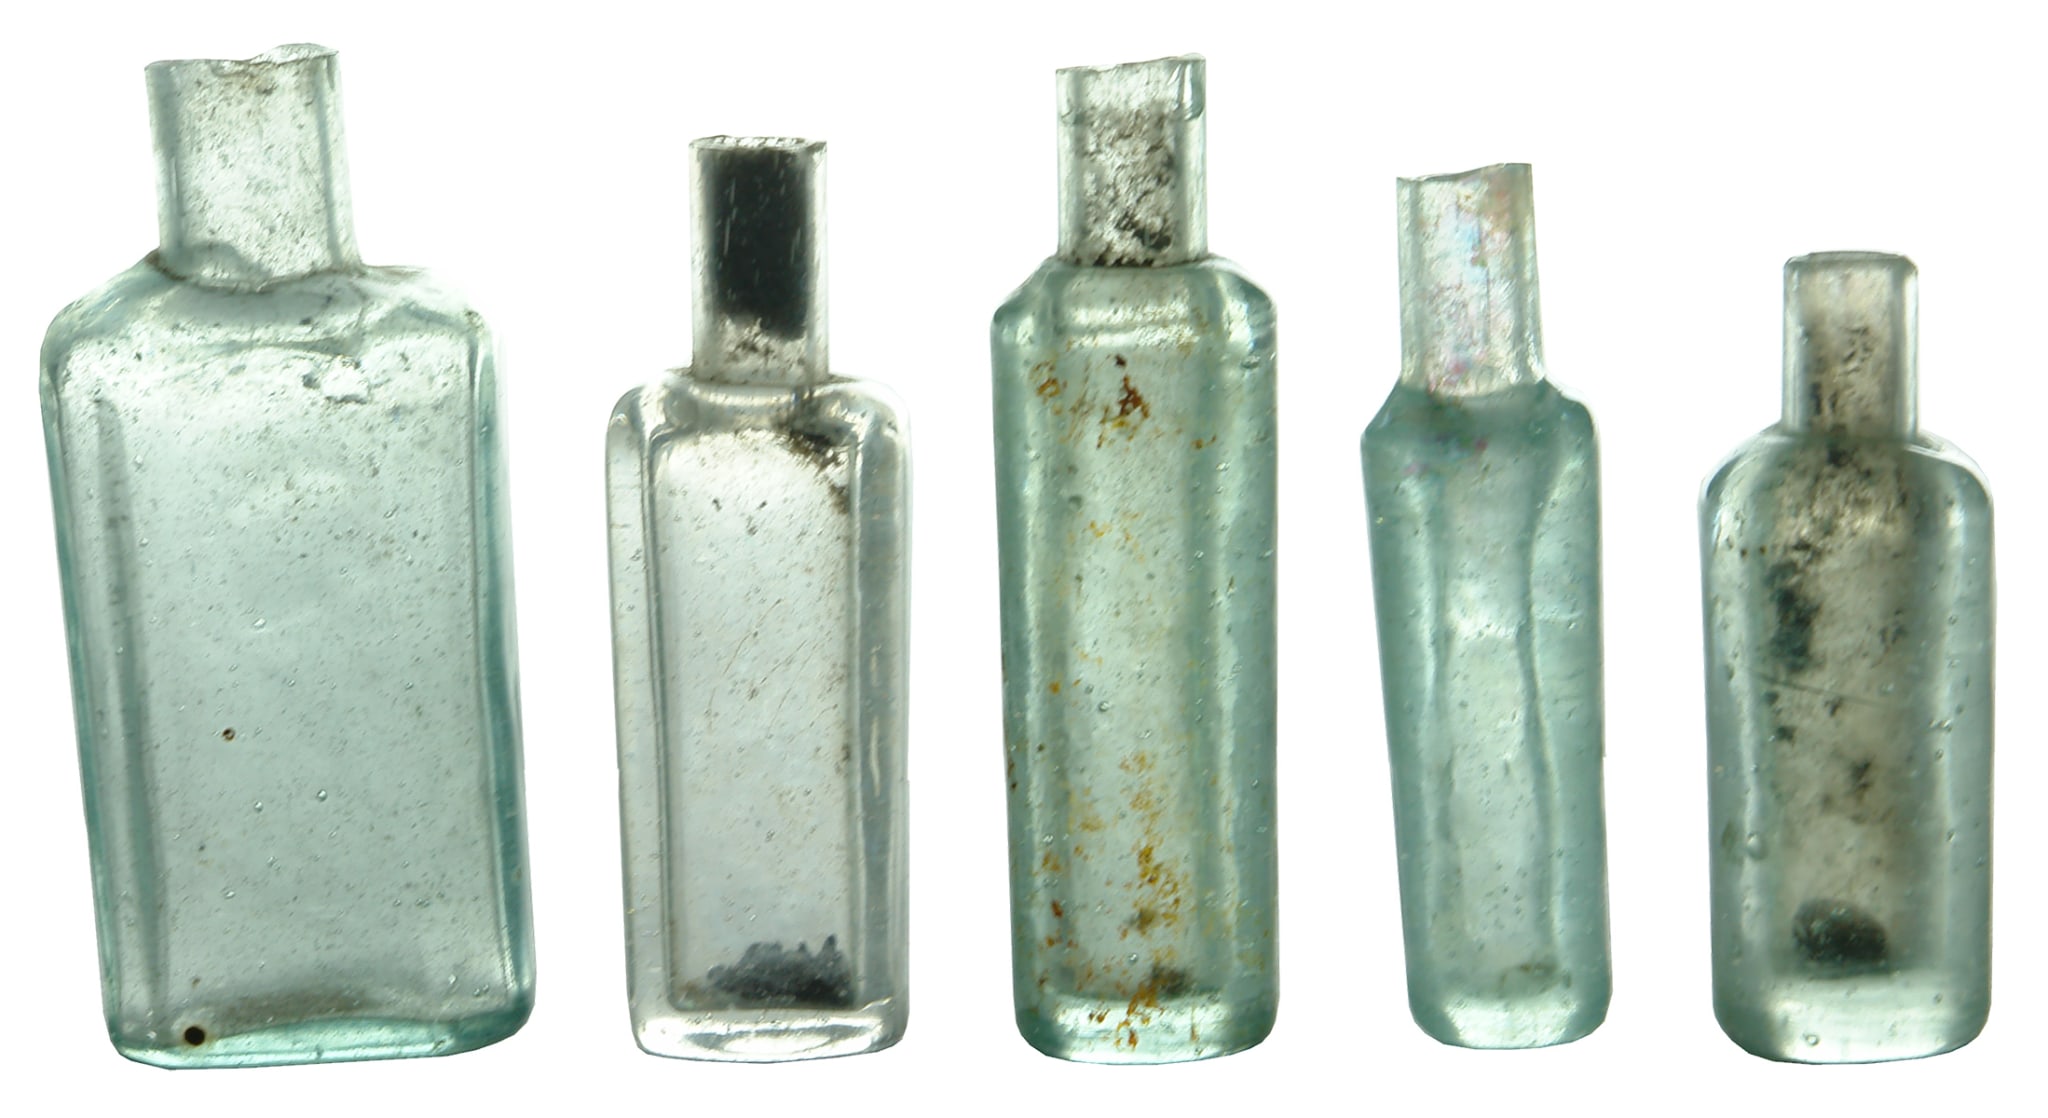 Chinese Opium Essence Glass Bottles